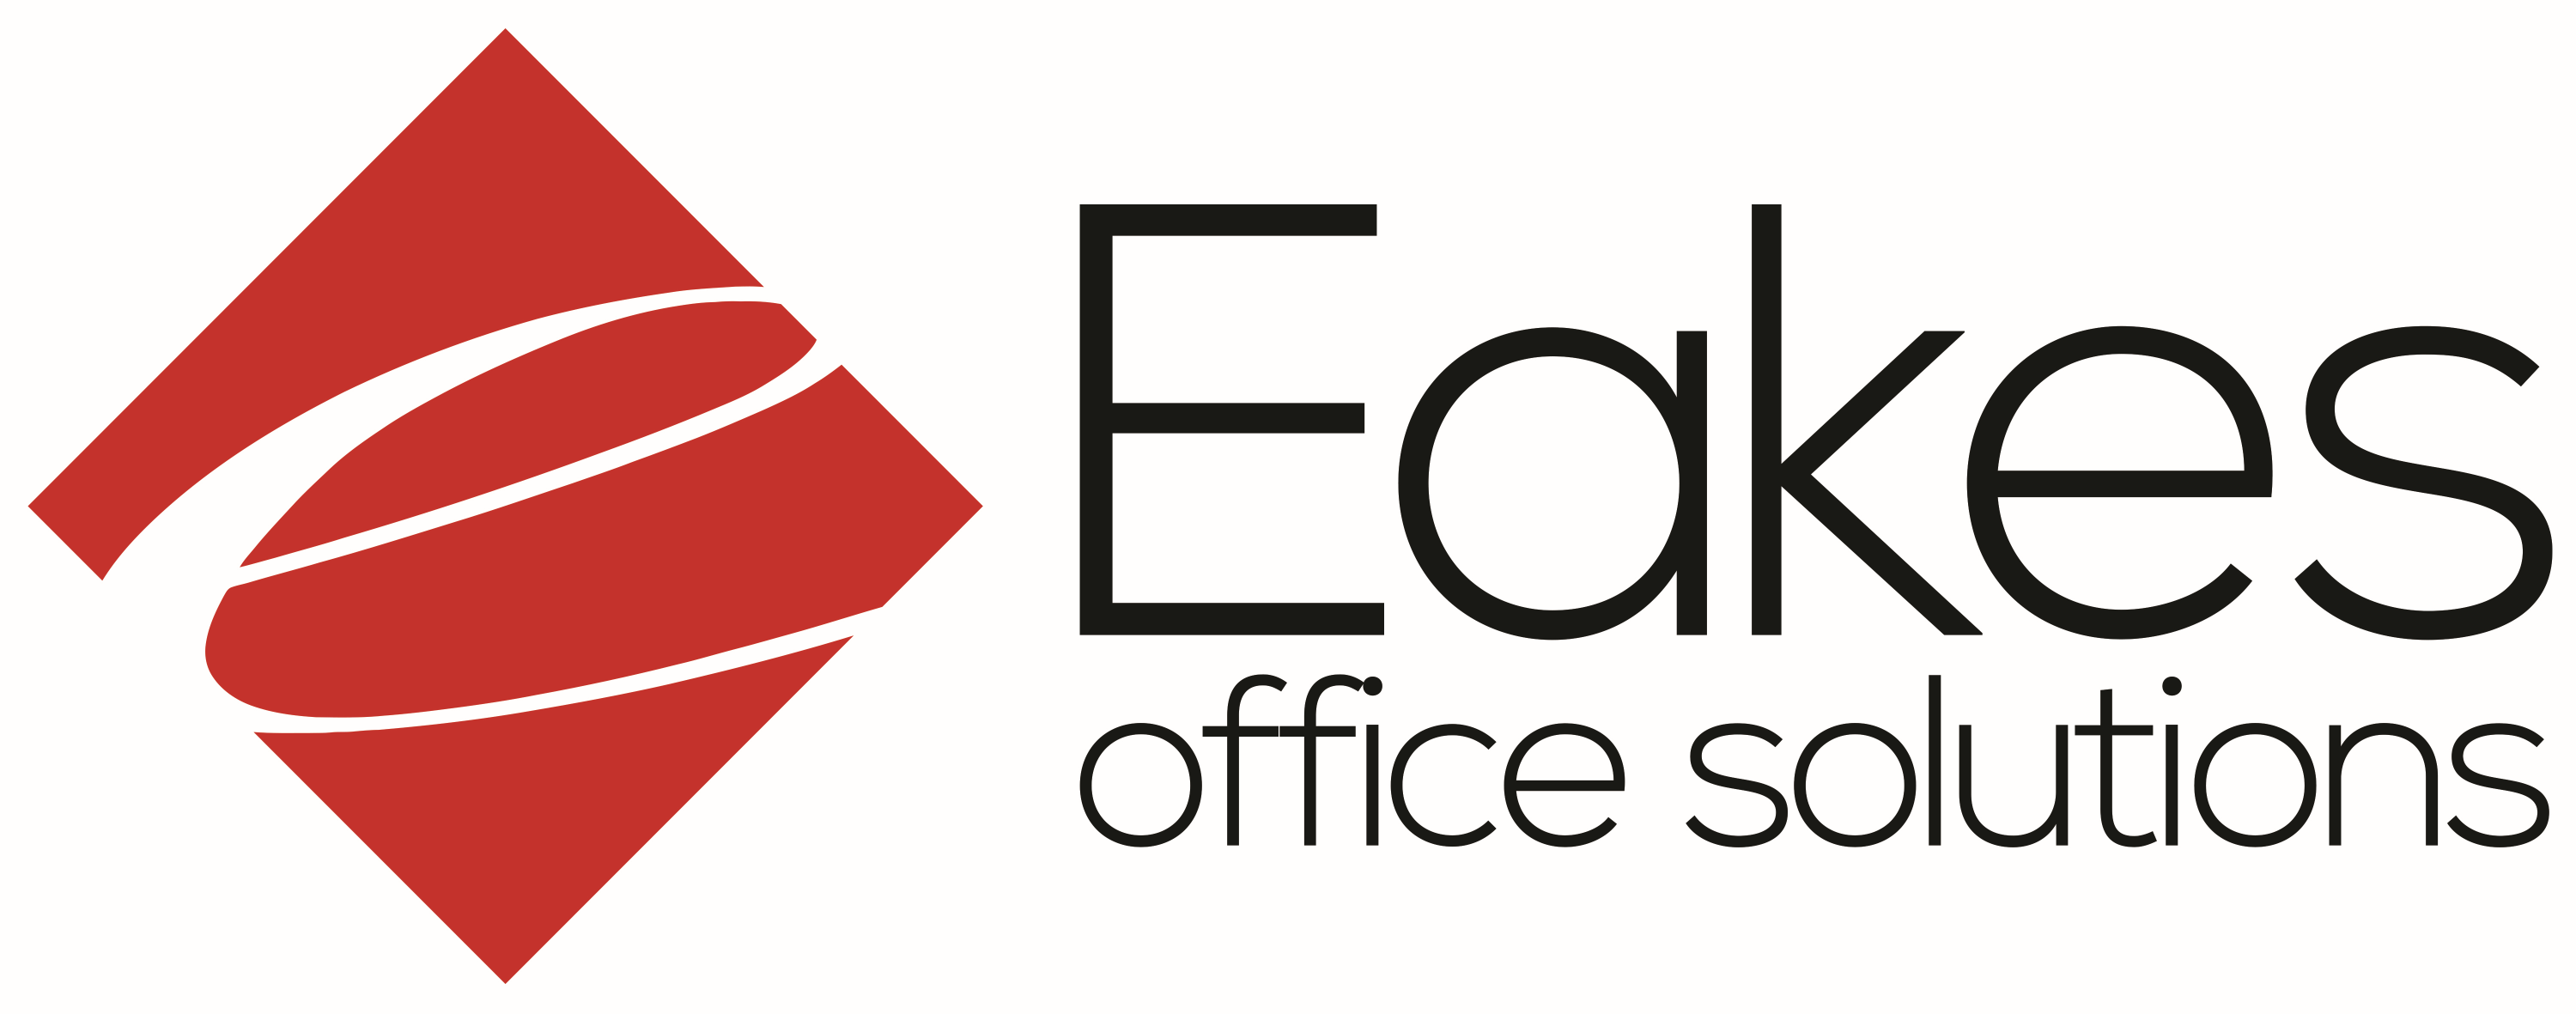 Eakes Office Solutions's Logo